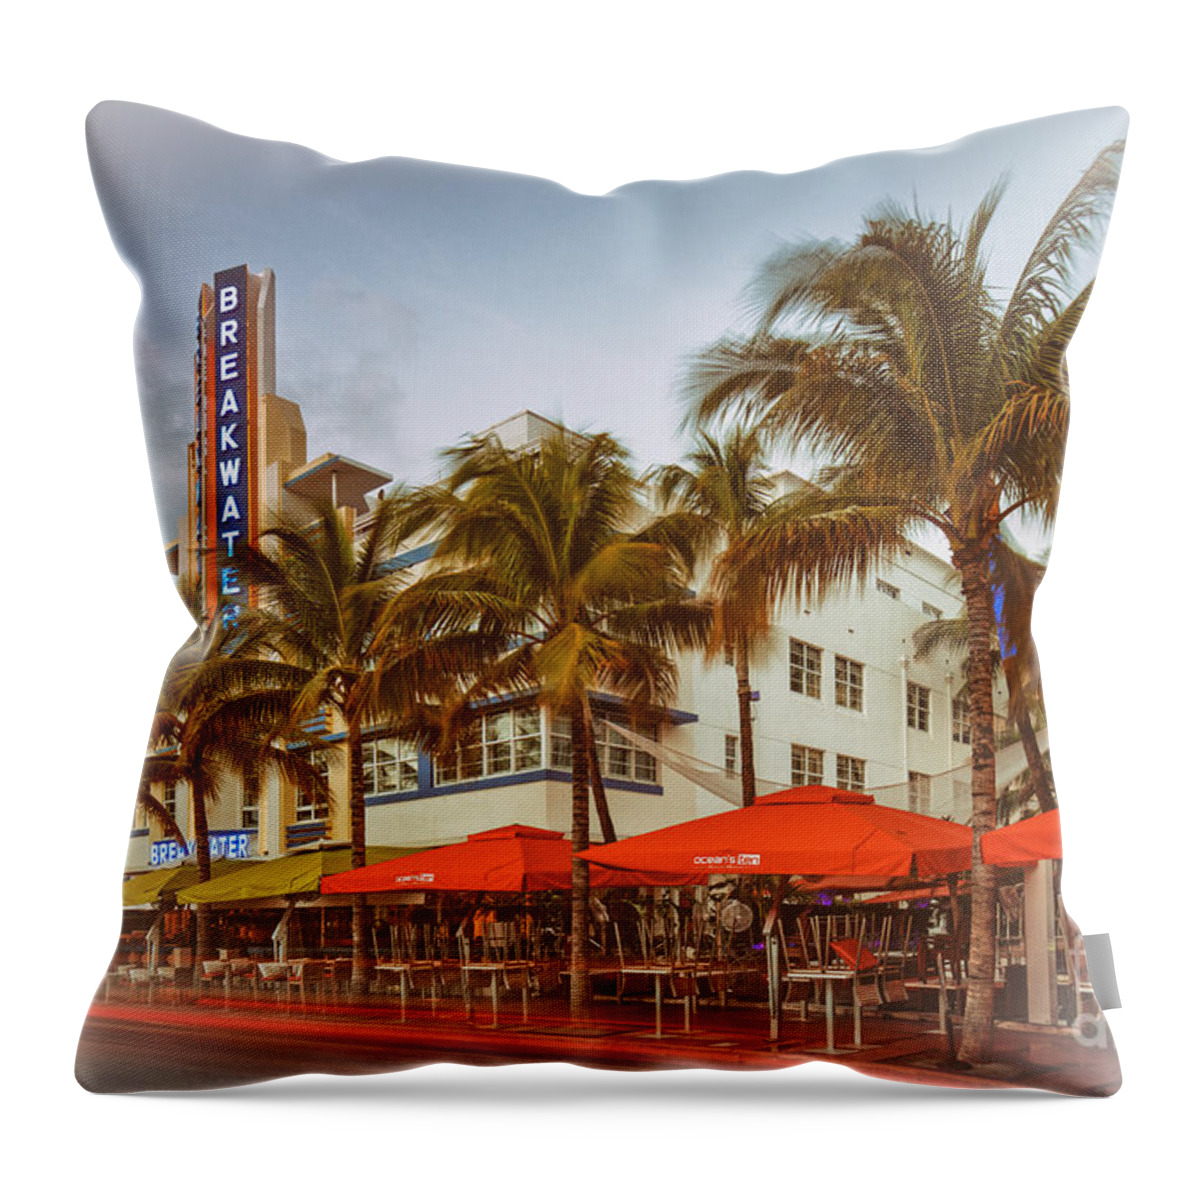 Sobe Throw Pillow featuring the photograph Postcard of Breakwater Esplendor Hotel on Ocean Drive - South Beach Miami Beach Florida by Silvio Ligutti